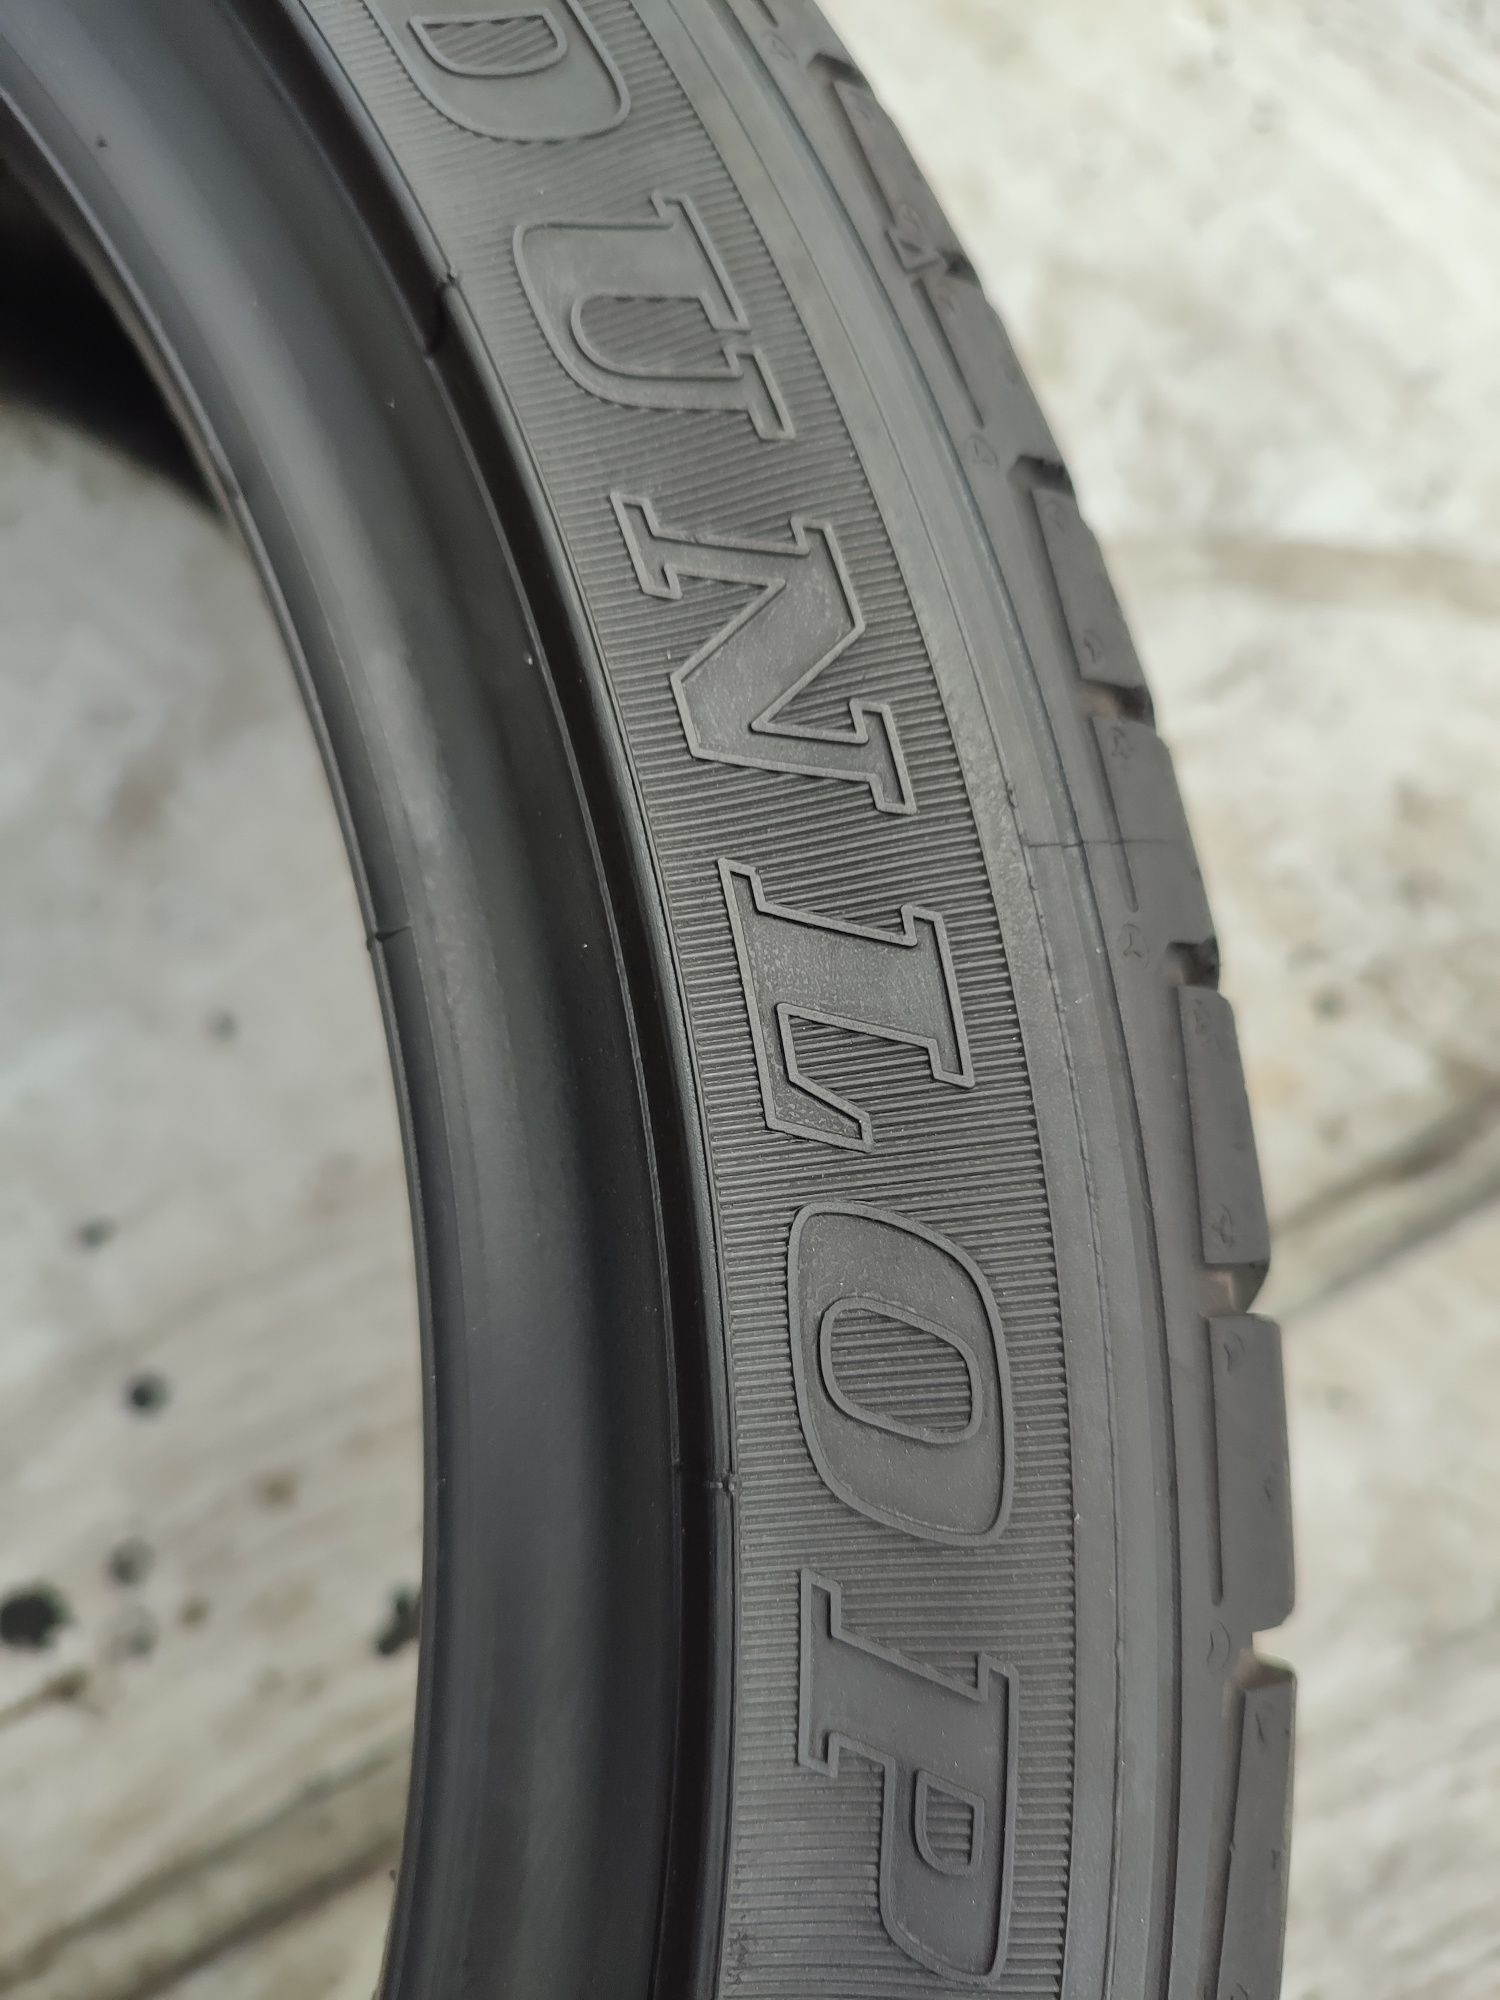 2x 215/40r17 87V Dunlop Sp Sport Maxx TT